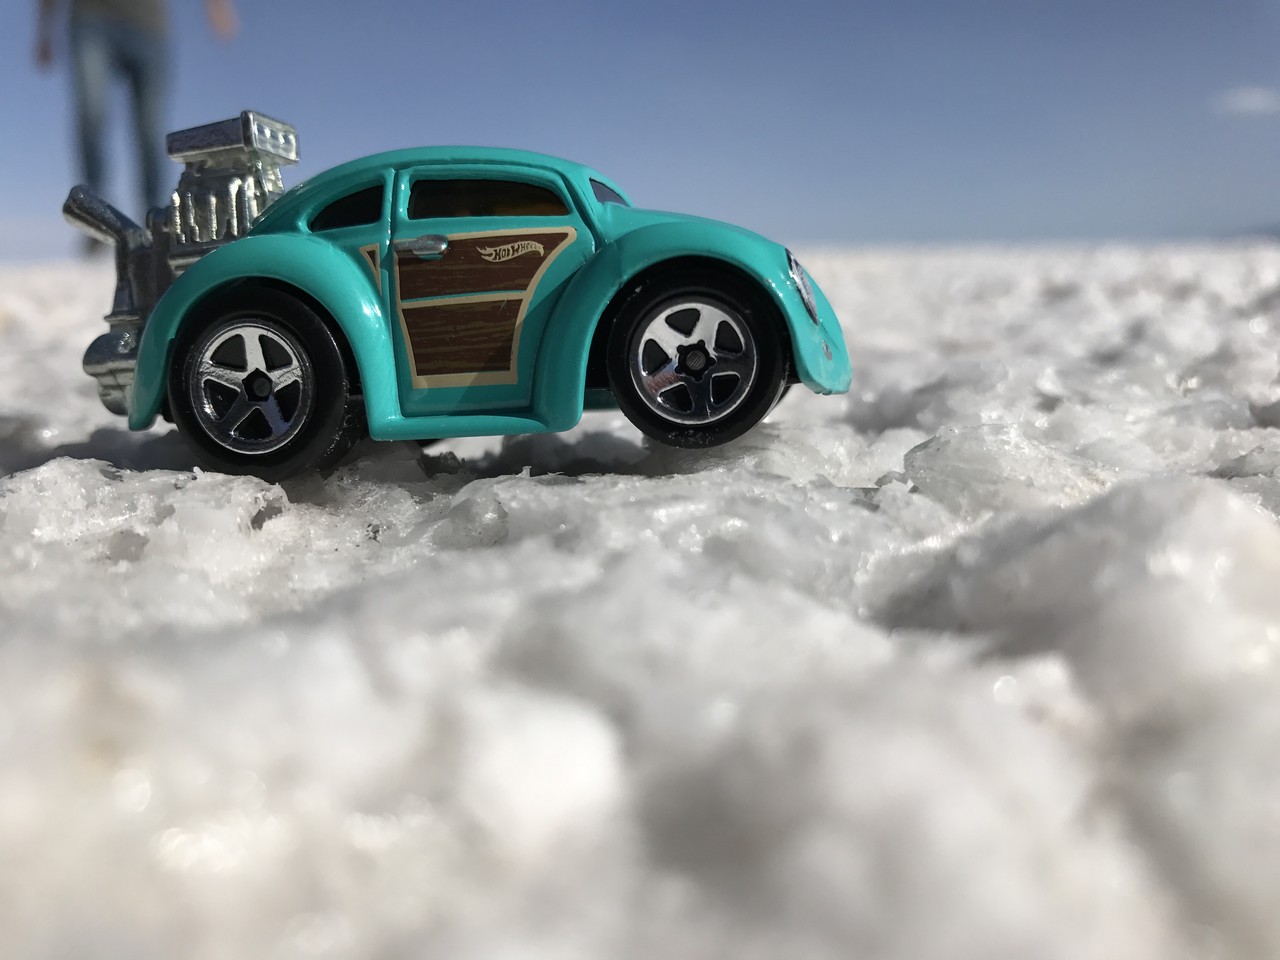 a toy car on snow